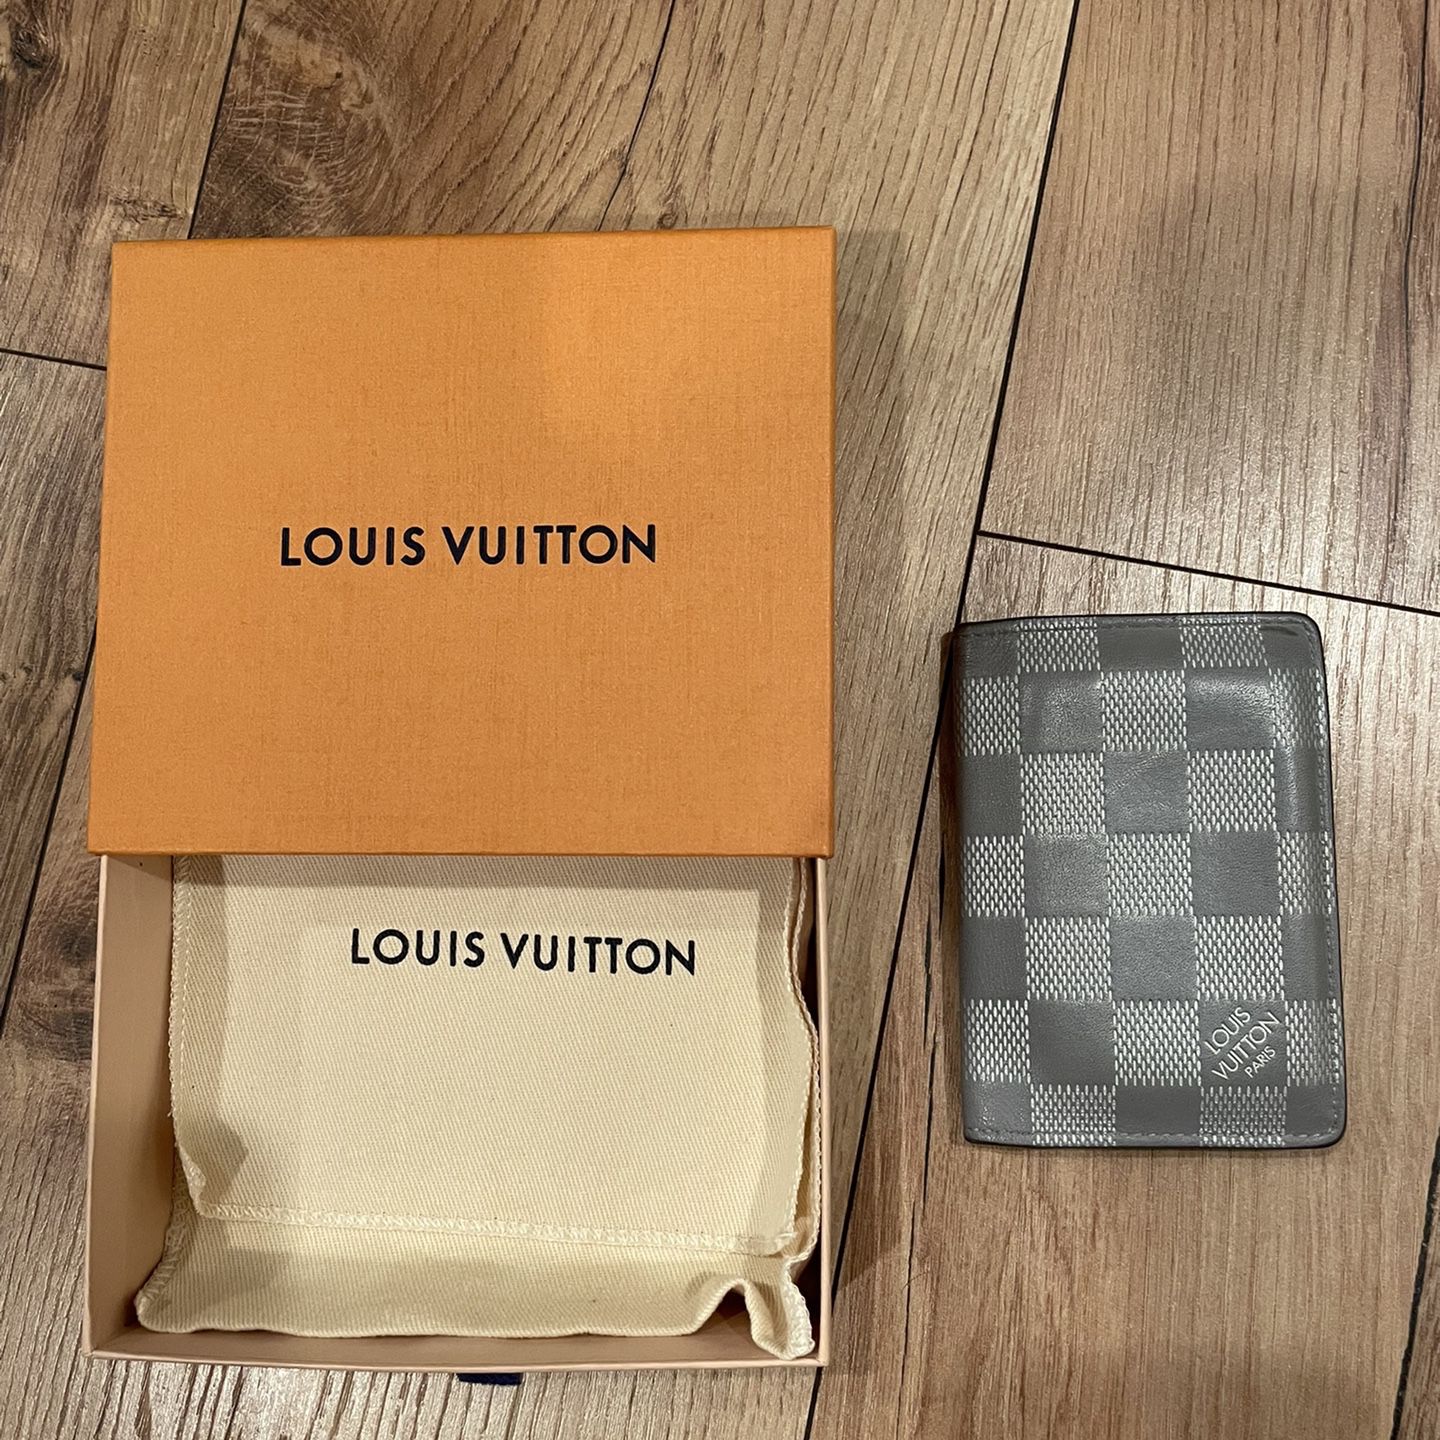 Louis Vuitton Slender Wallet for Sale in Irvine, CA - OfferUp